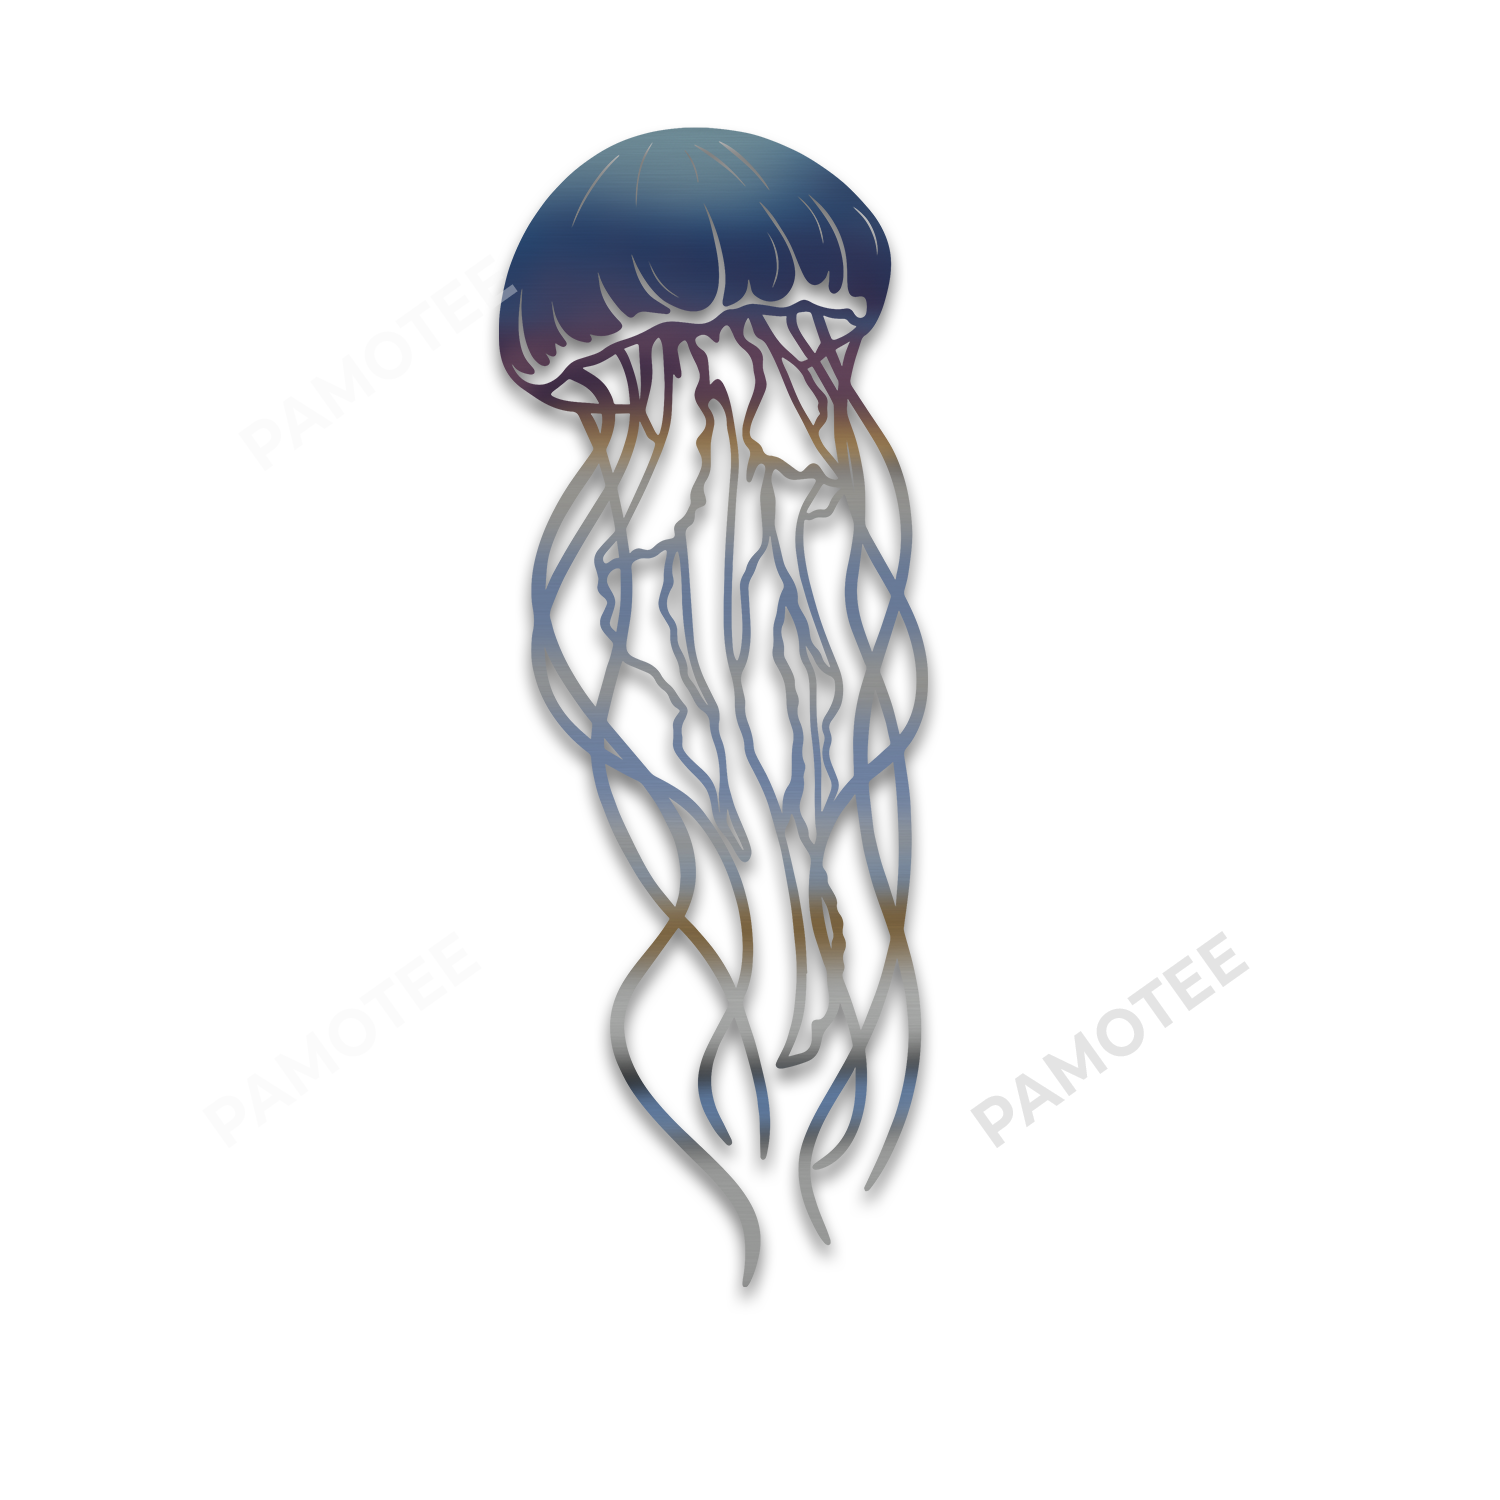 Jellyfish Metal Art, Jellyfish Bedroom Plaque